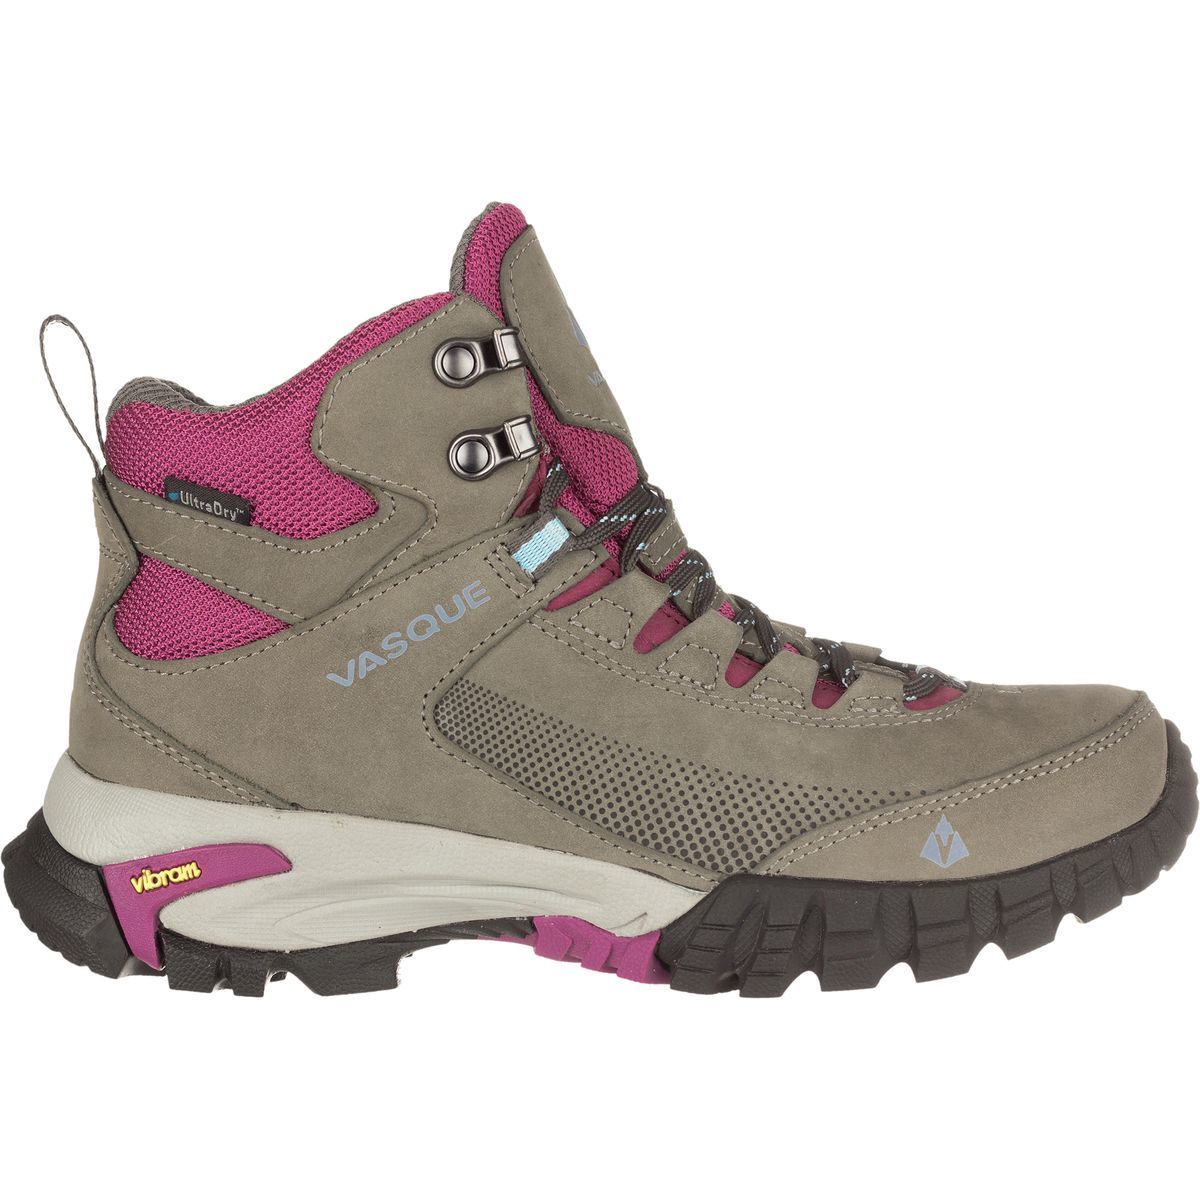 Vasque Talus Trek UltraDry Hiking Boot - Women's | Backcountry.com